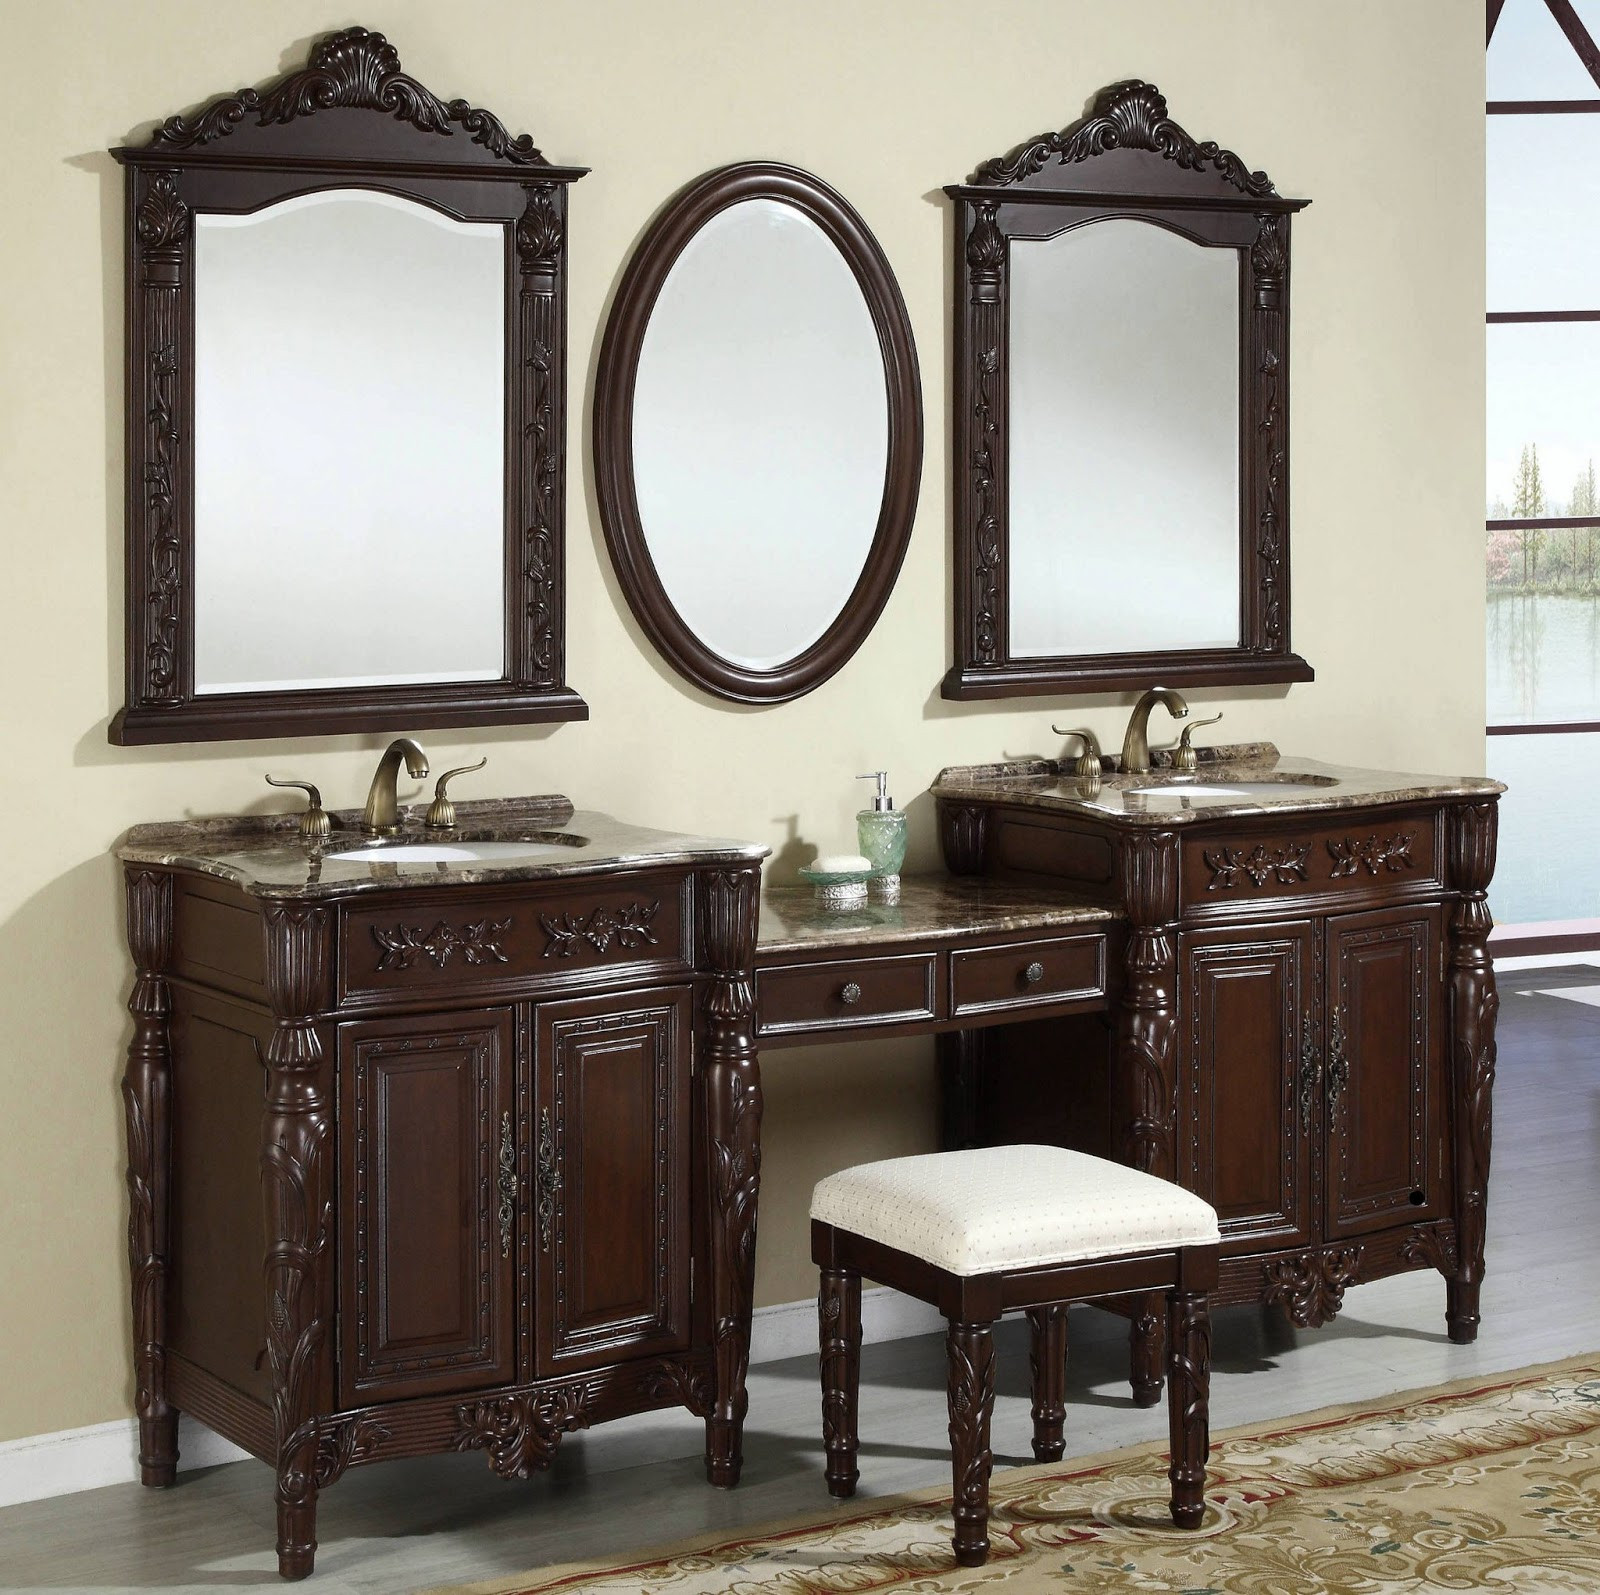 Mirrored Bathroom Vanity Cabinet
 Bathroom Vanity Mirrors Models and Buying Tips Cabinets